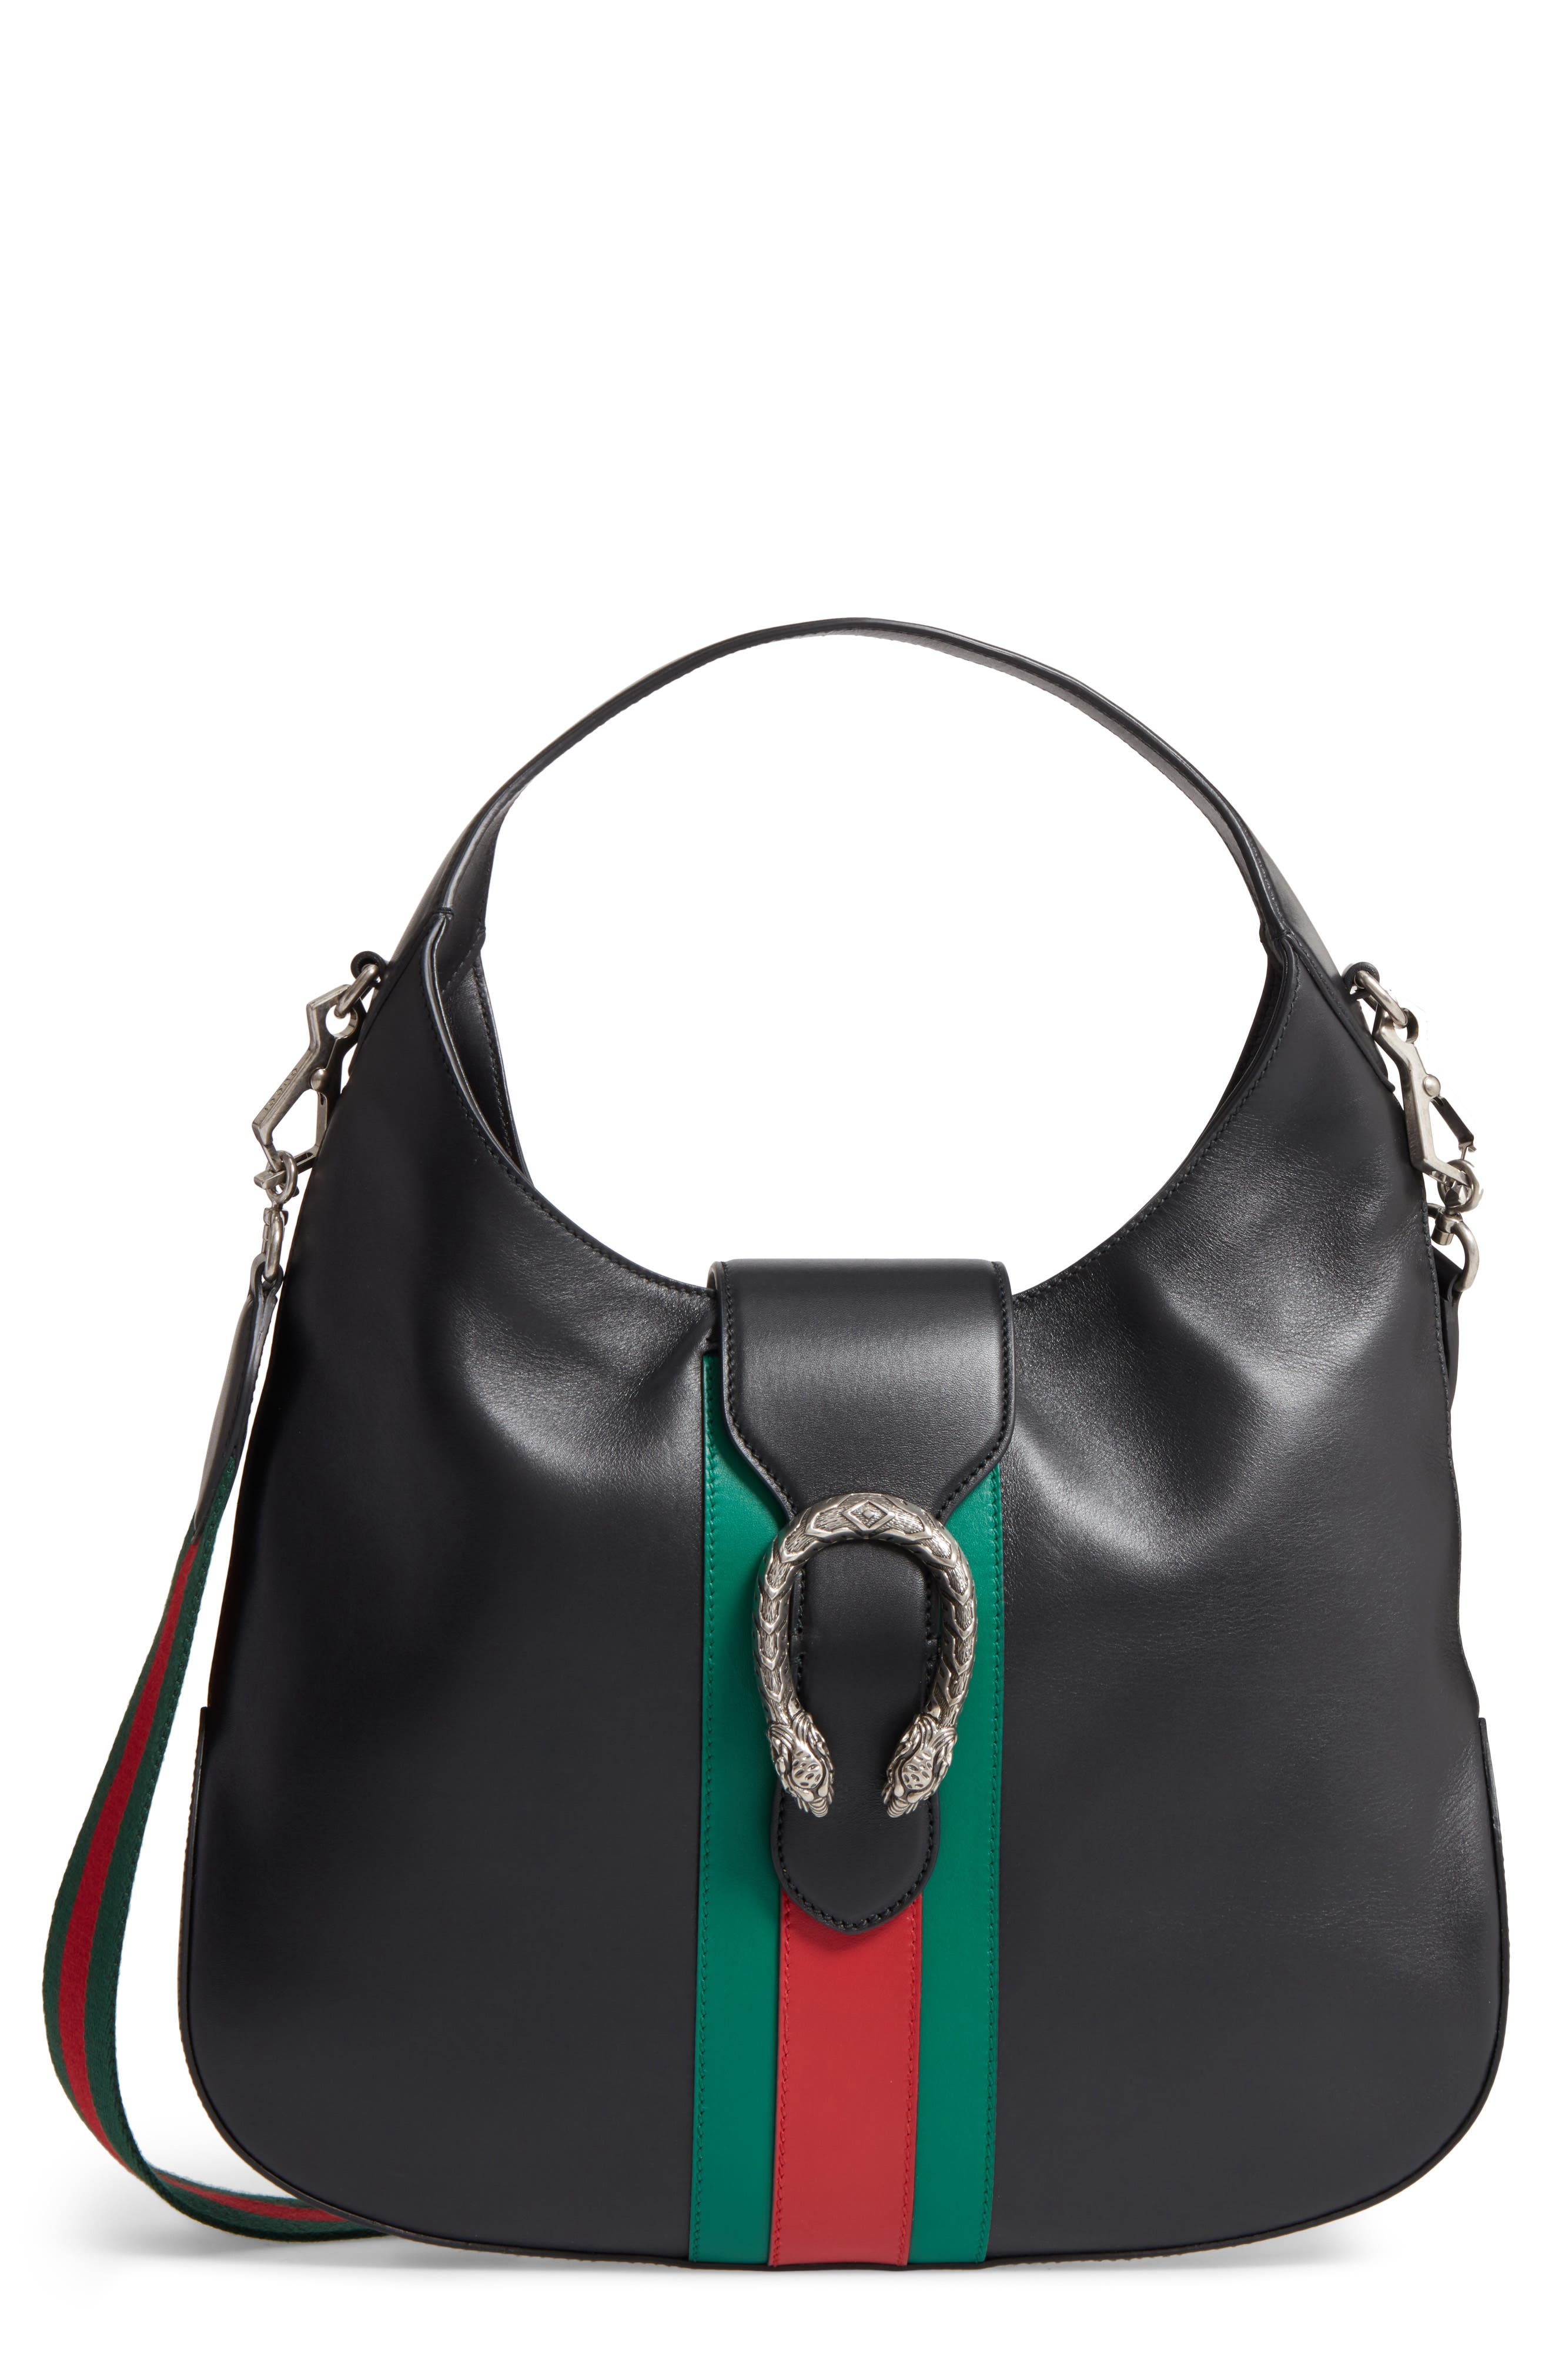 Gucci Dionysus Medium Leather Hobo Bag 